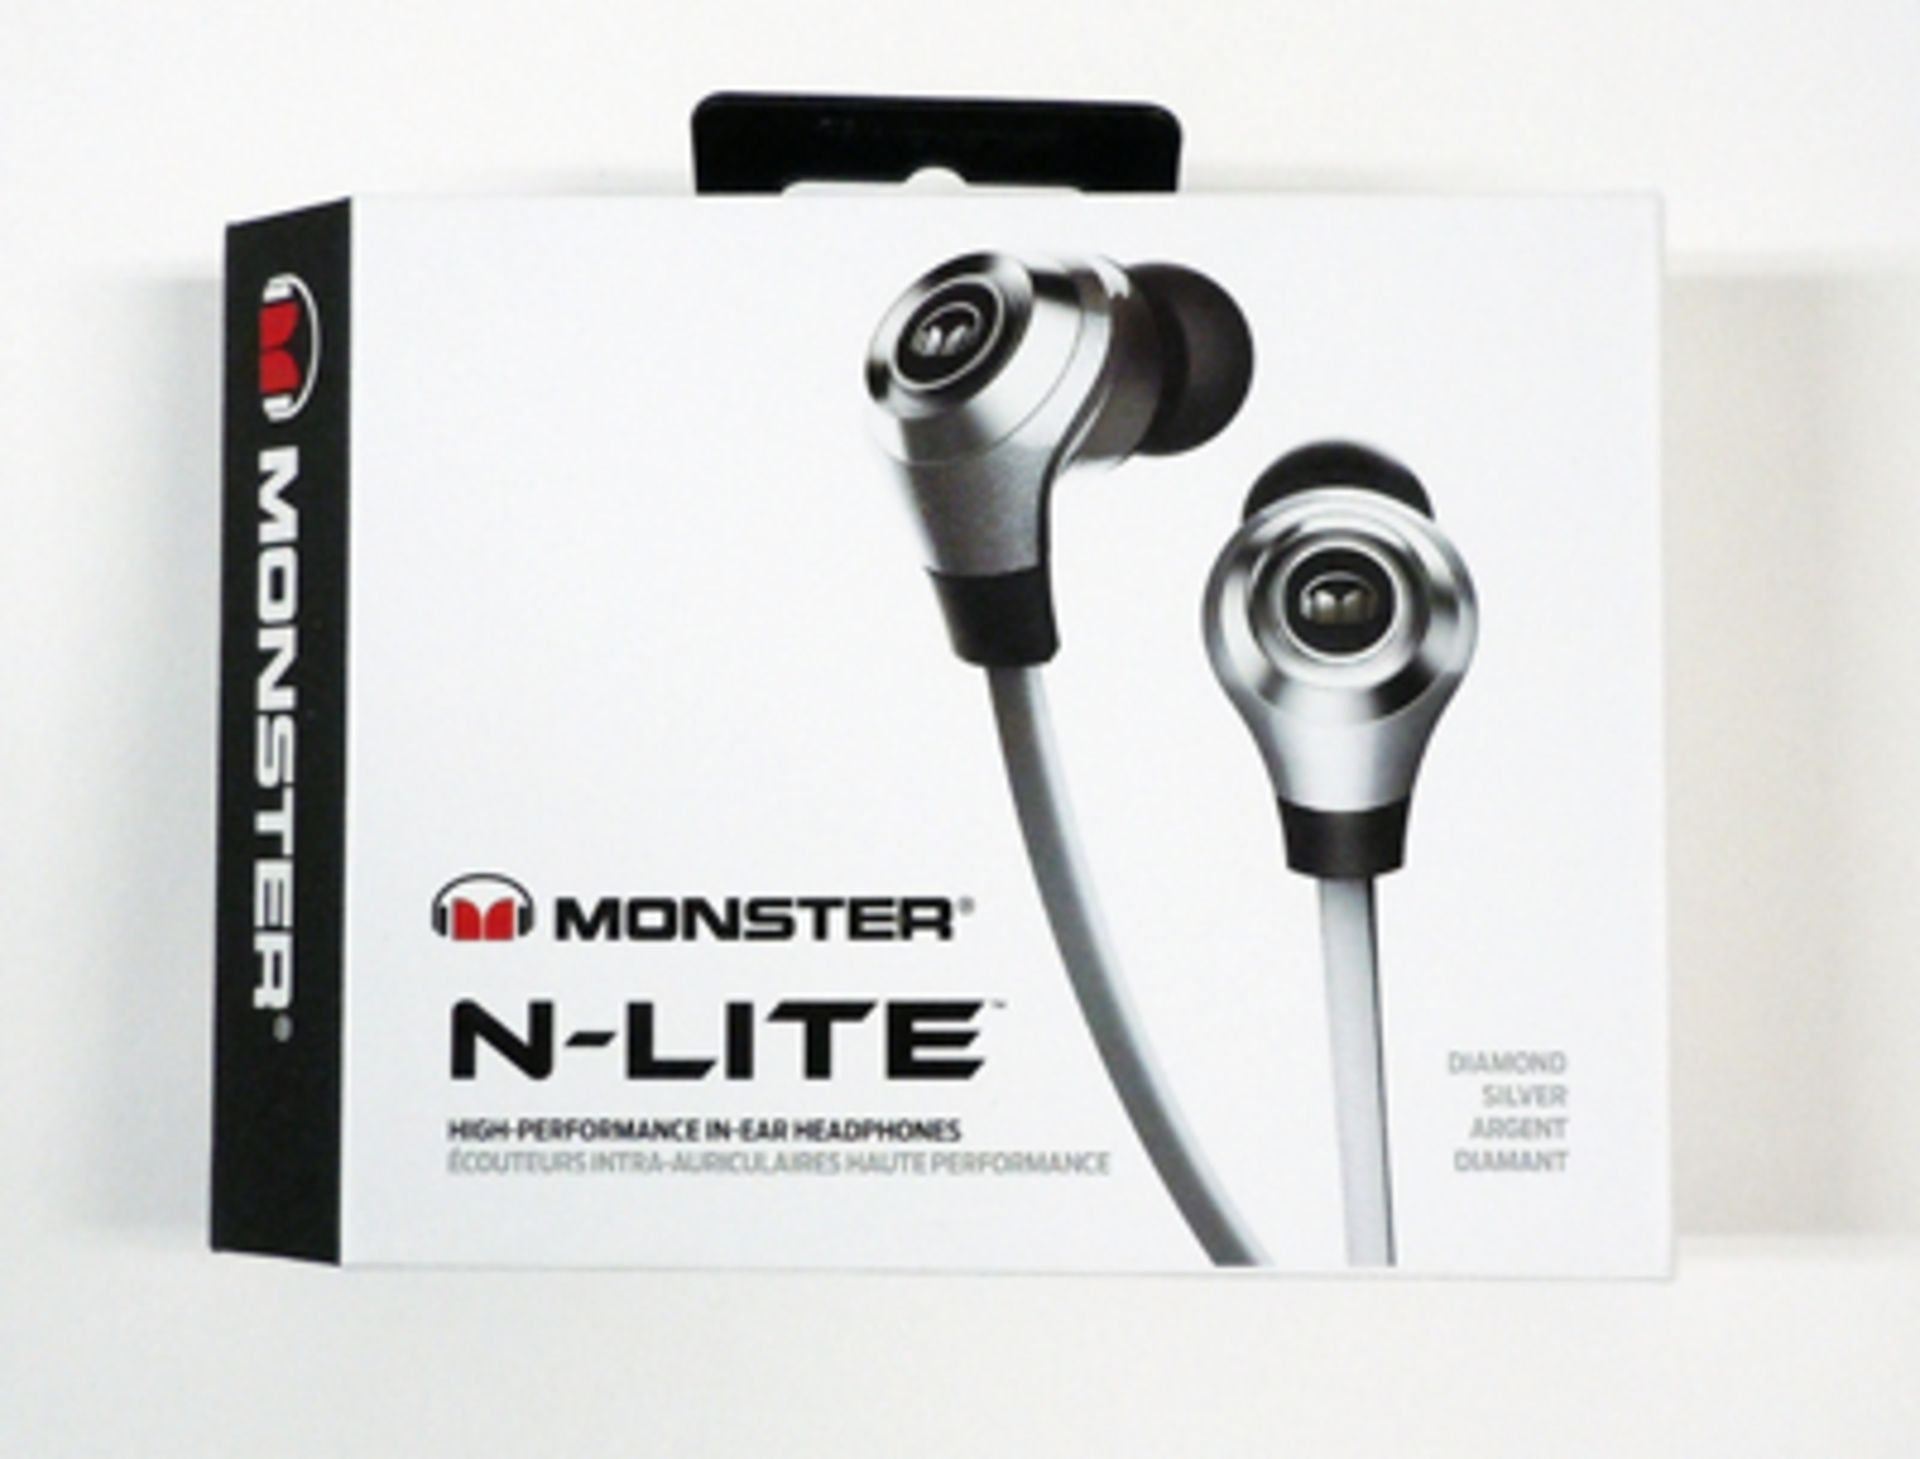 V Brand New Monster N-Lite High Performance In-Ear Headphones In Silver RRP49.99 X 2 Bid price to be